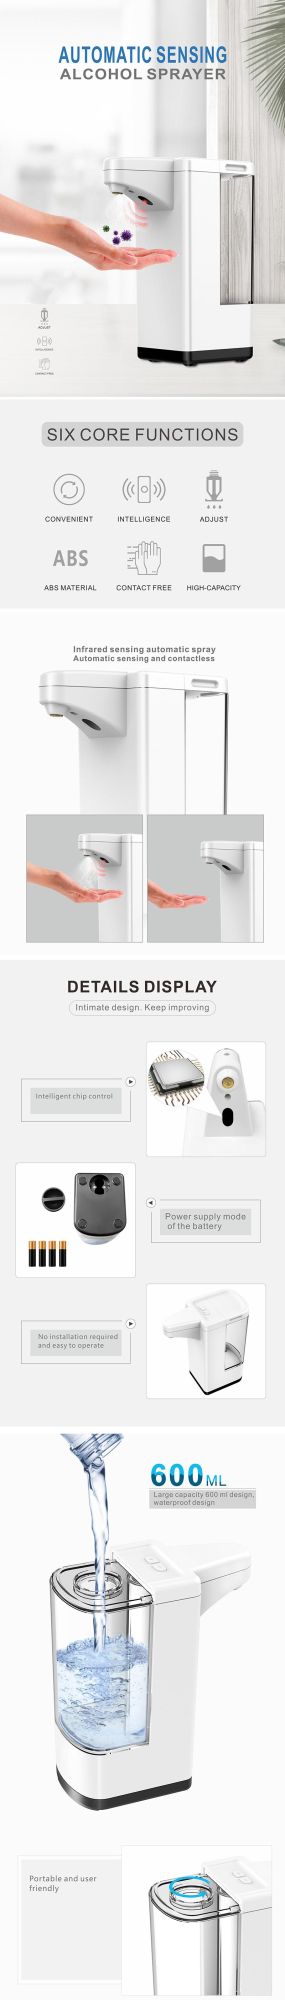 Kitchen Washroom Foam Soap Dispenser Desktop Non-Contact Automatic Soap Dispenser for Hand Cleaning